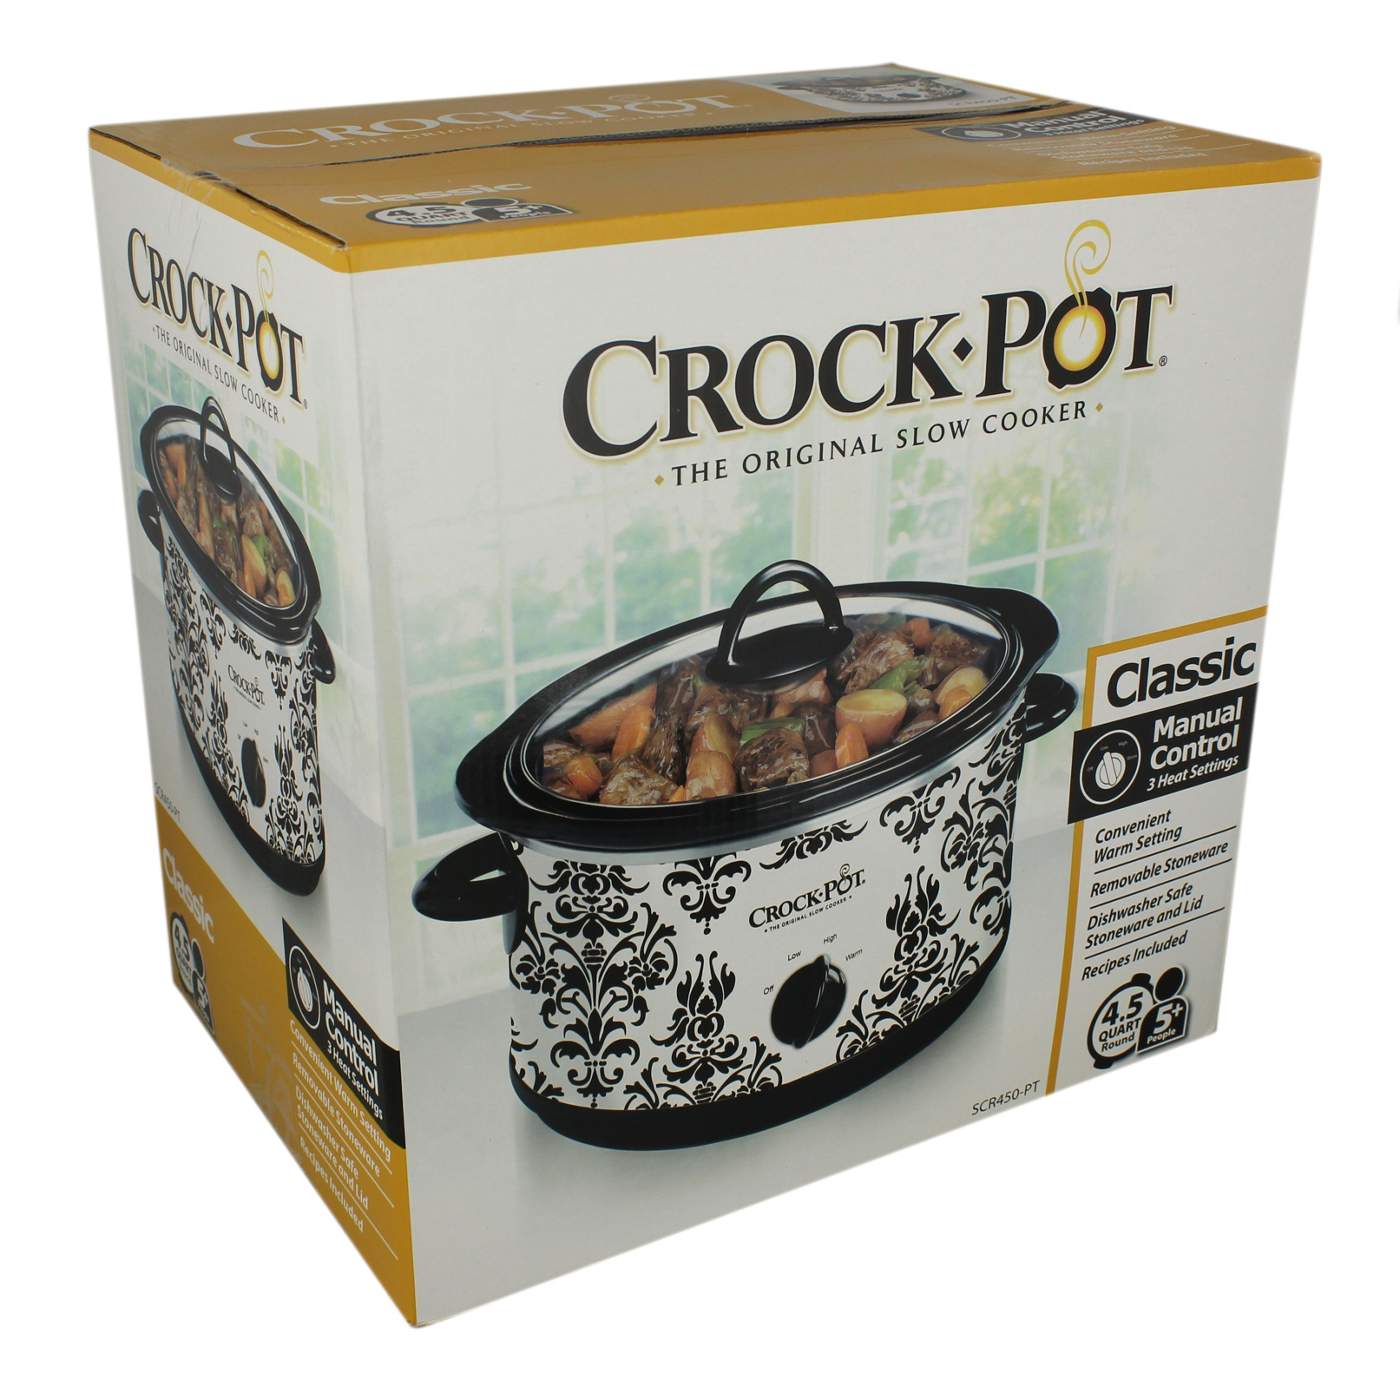  Crock Pot 1 to 1/2 Quart Round Manual Slow Cooker